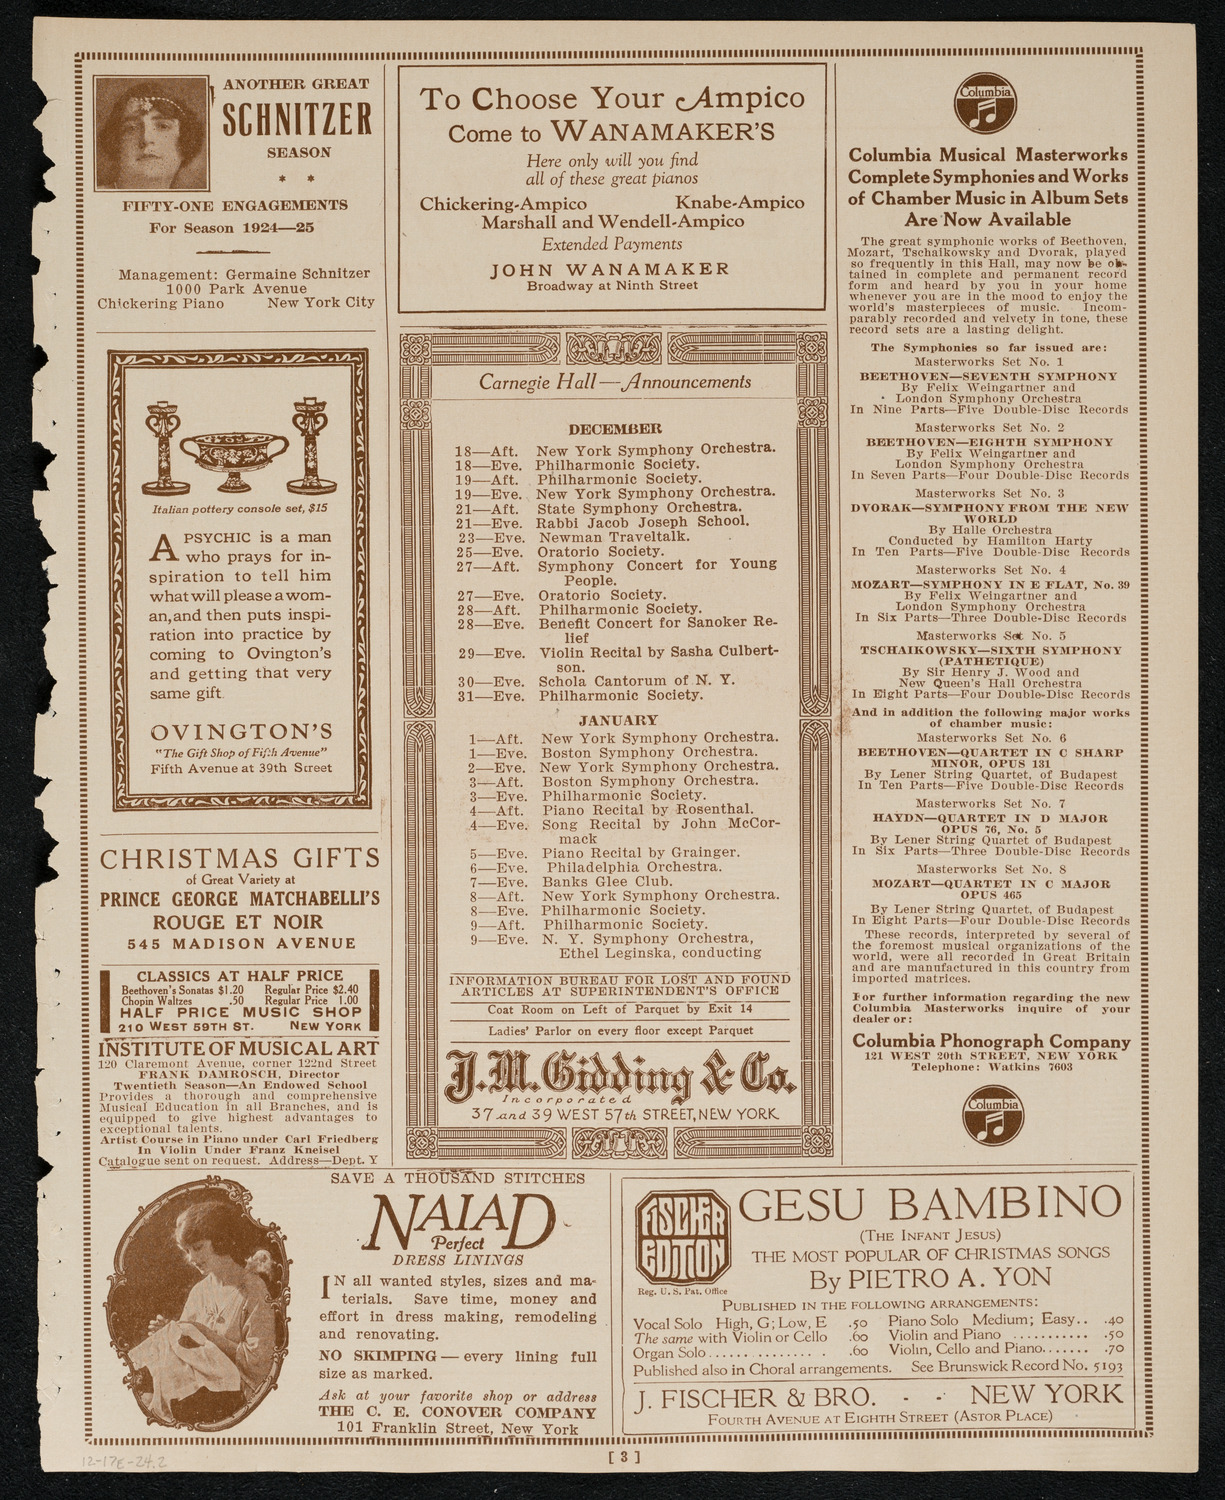 State Symphony Orchestra of New York, December 17, 1924, program page 3